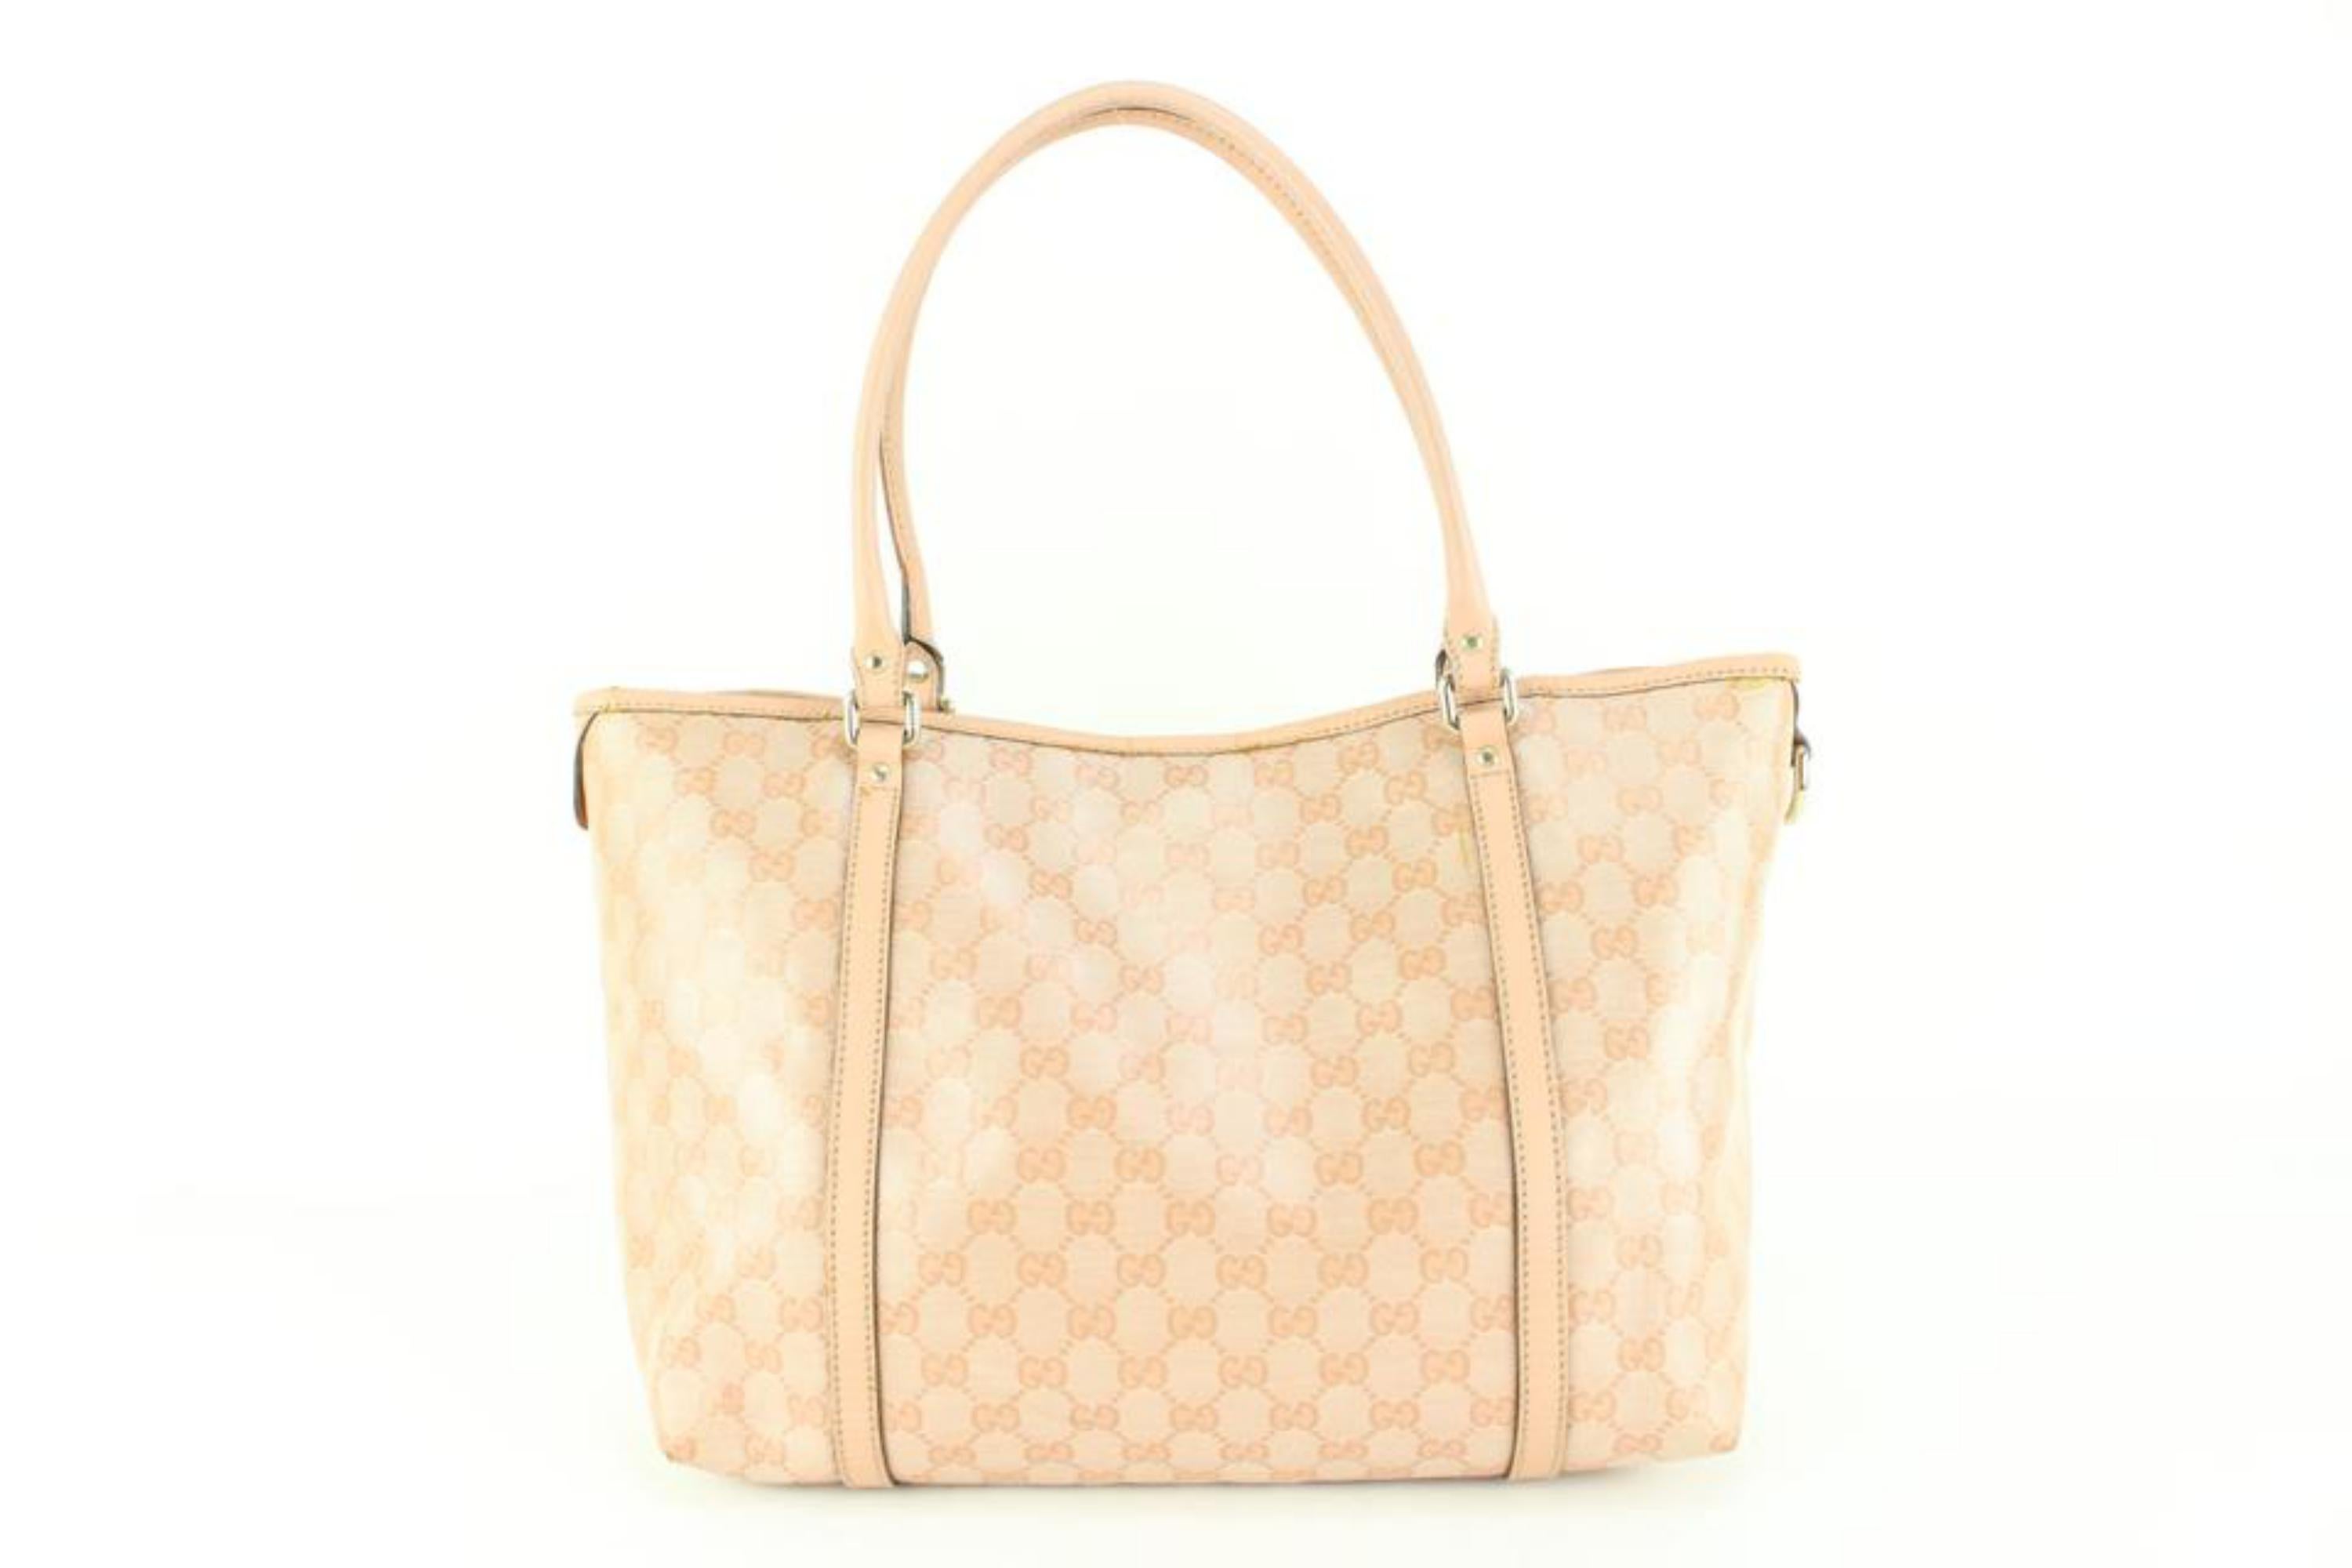 Gucci Pink Monogram GG Crystal Joy Tote Bag 66gk512s 1